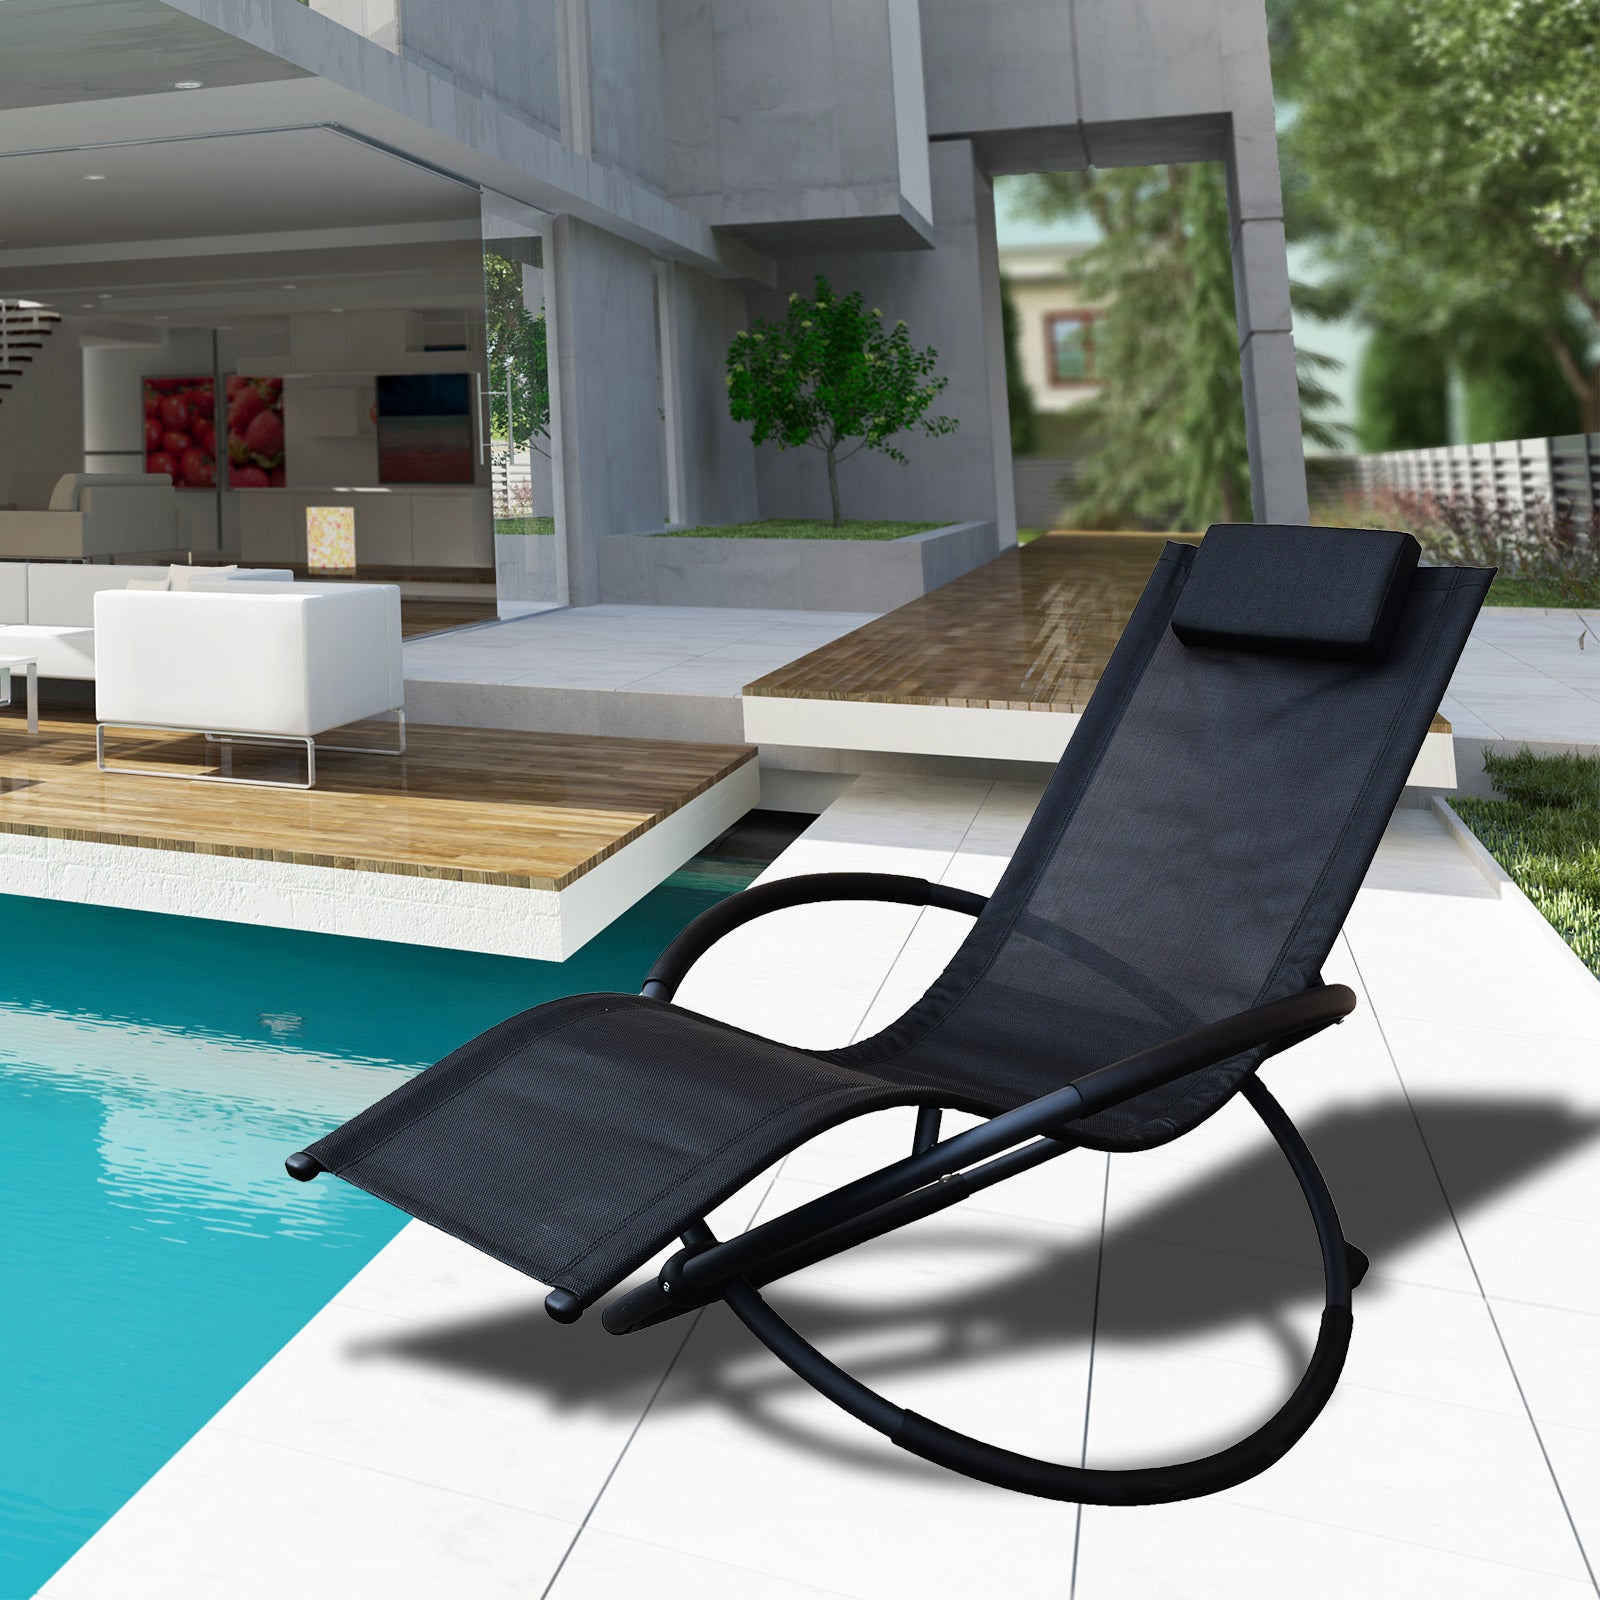 Arcadia Furniture Zero Gravity Rocking Chair  - Black